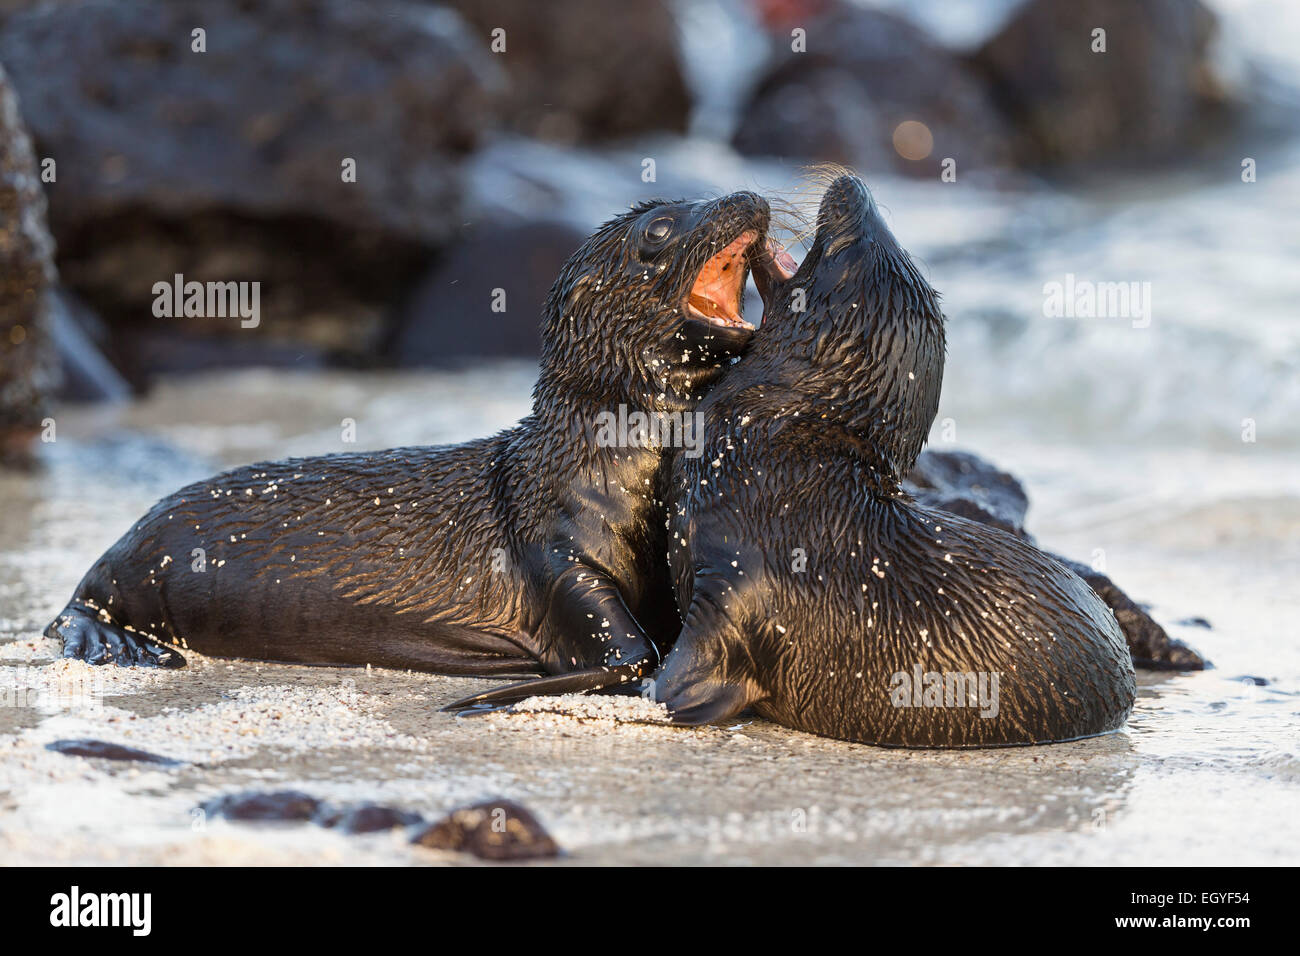 Ecuador, Galapagos Islands, Santa Fe, two young sea lions playing Stock Photo